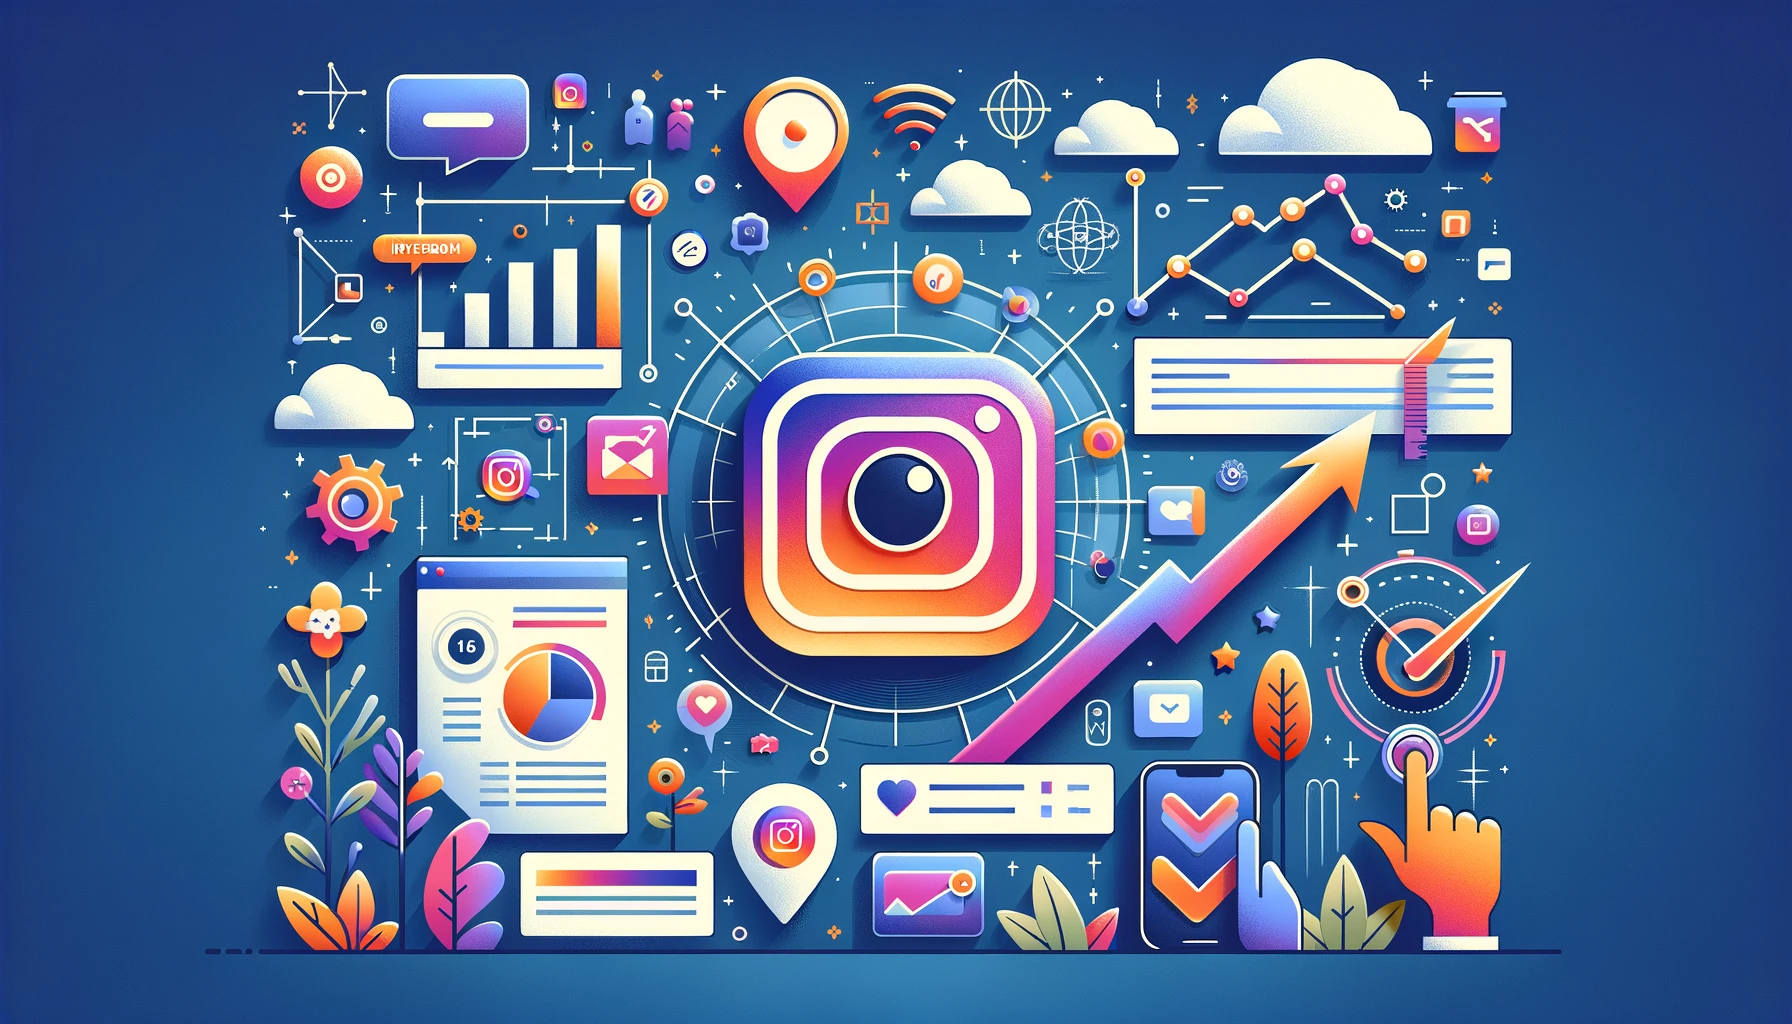 Maximizing Social Media ROI: Instagram vs. Facebook - A Rank Panel Analysis